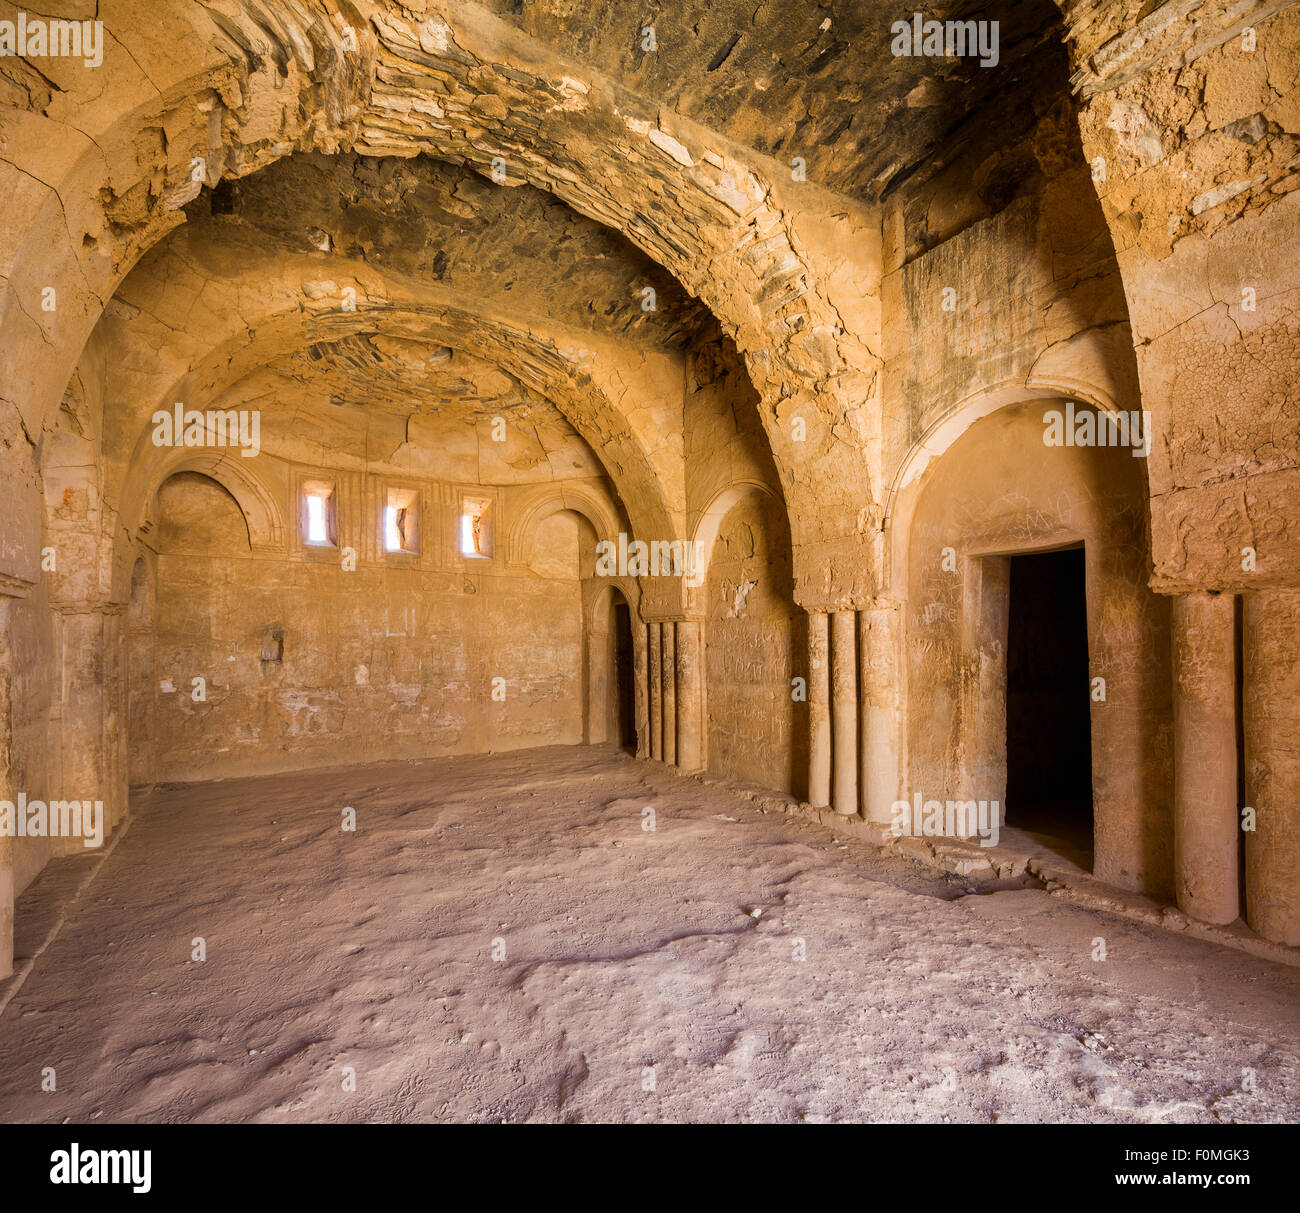 vaulted room, the early Islamic site of Qasr Kharana, Jordan Stock Photo